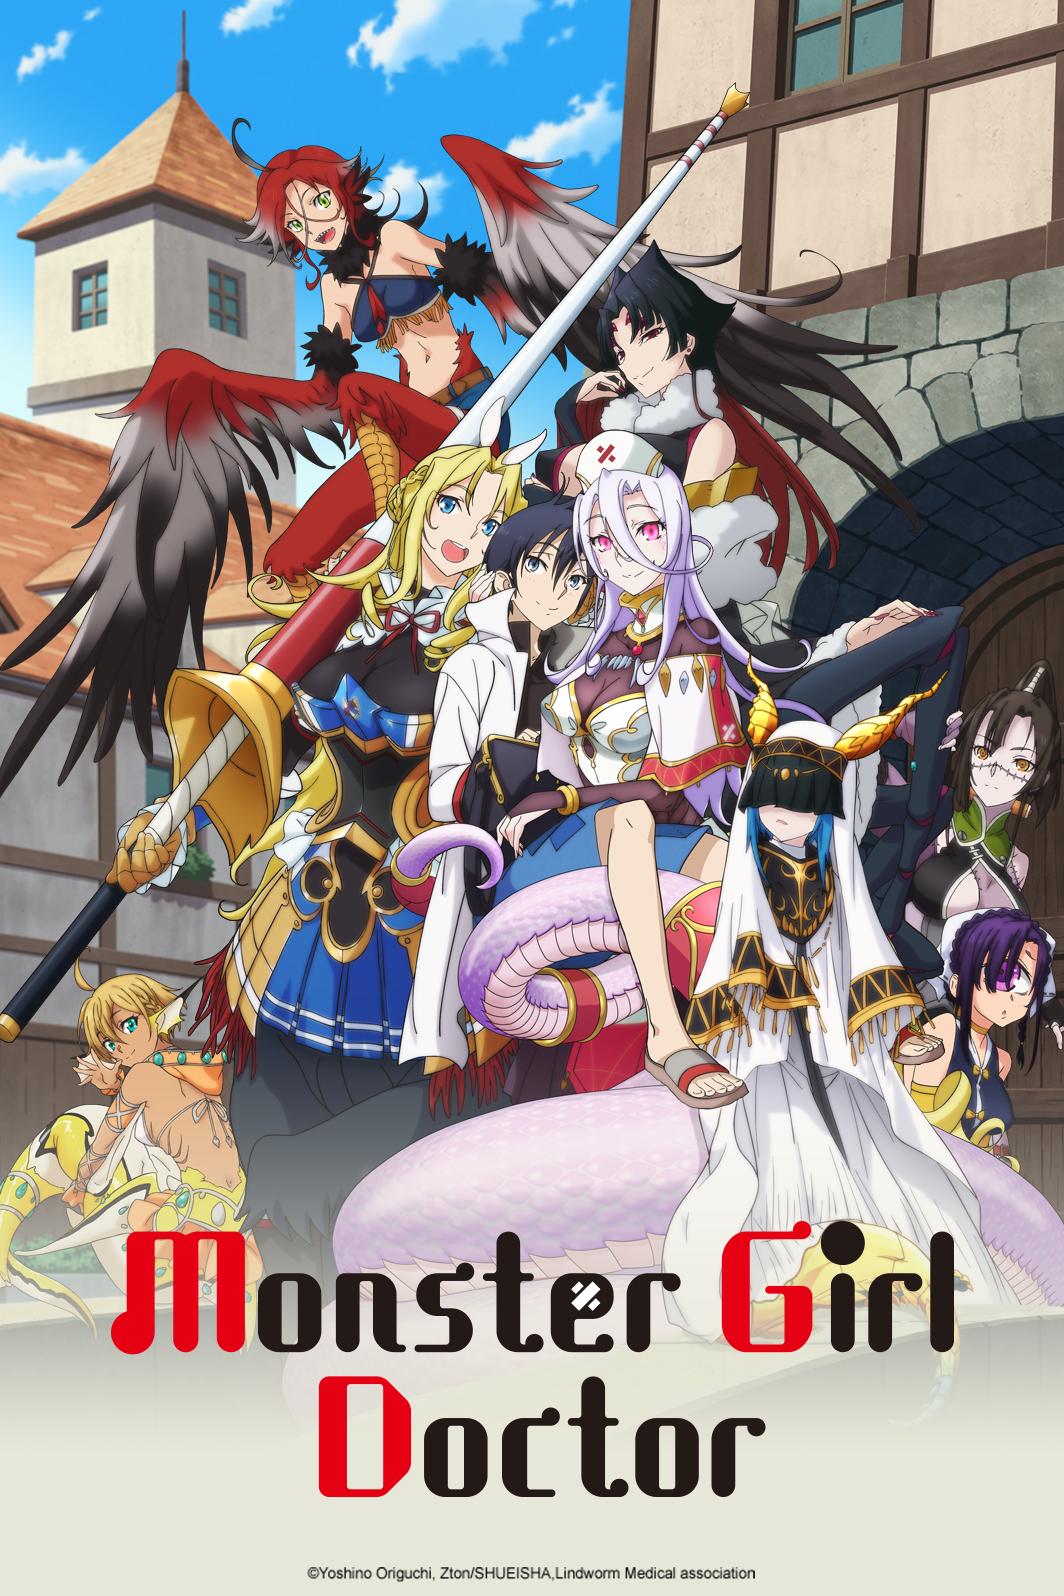 Monster Musume Episode 1